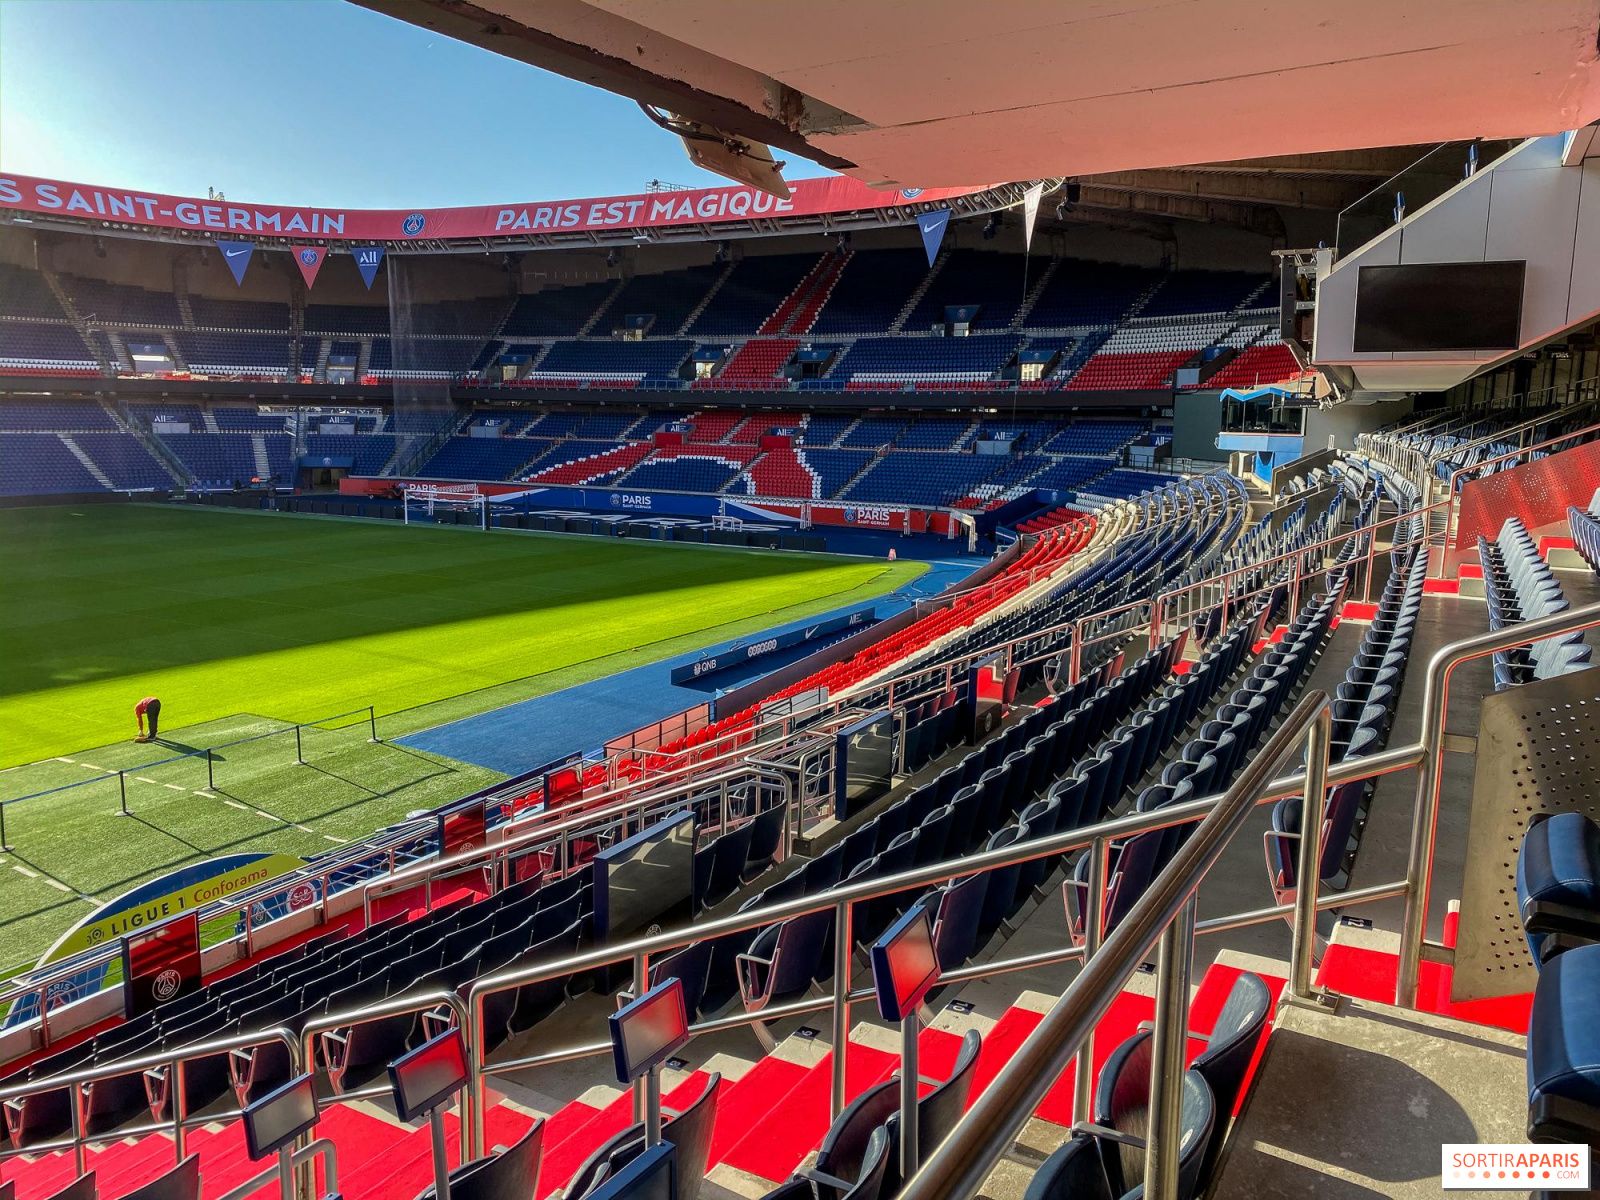 PSG Experience, exclusive tour of the VIP area and the Galerie at Paris Parc des Princes stadium